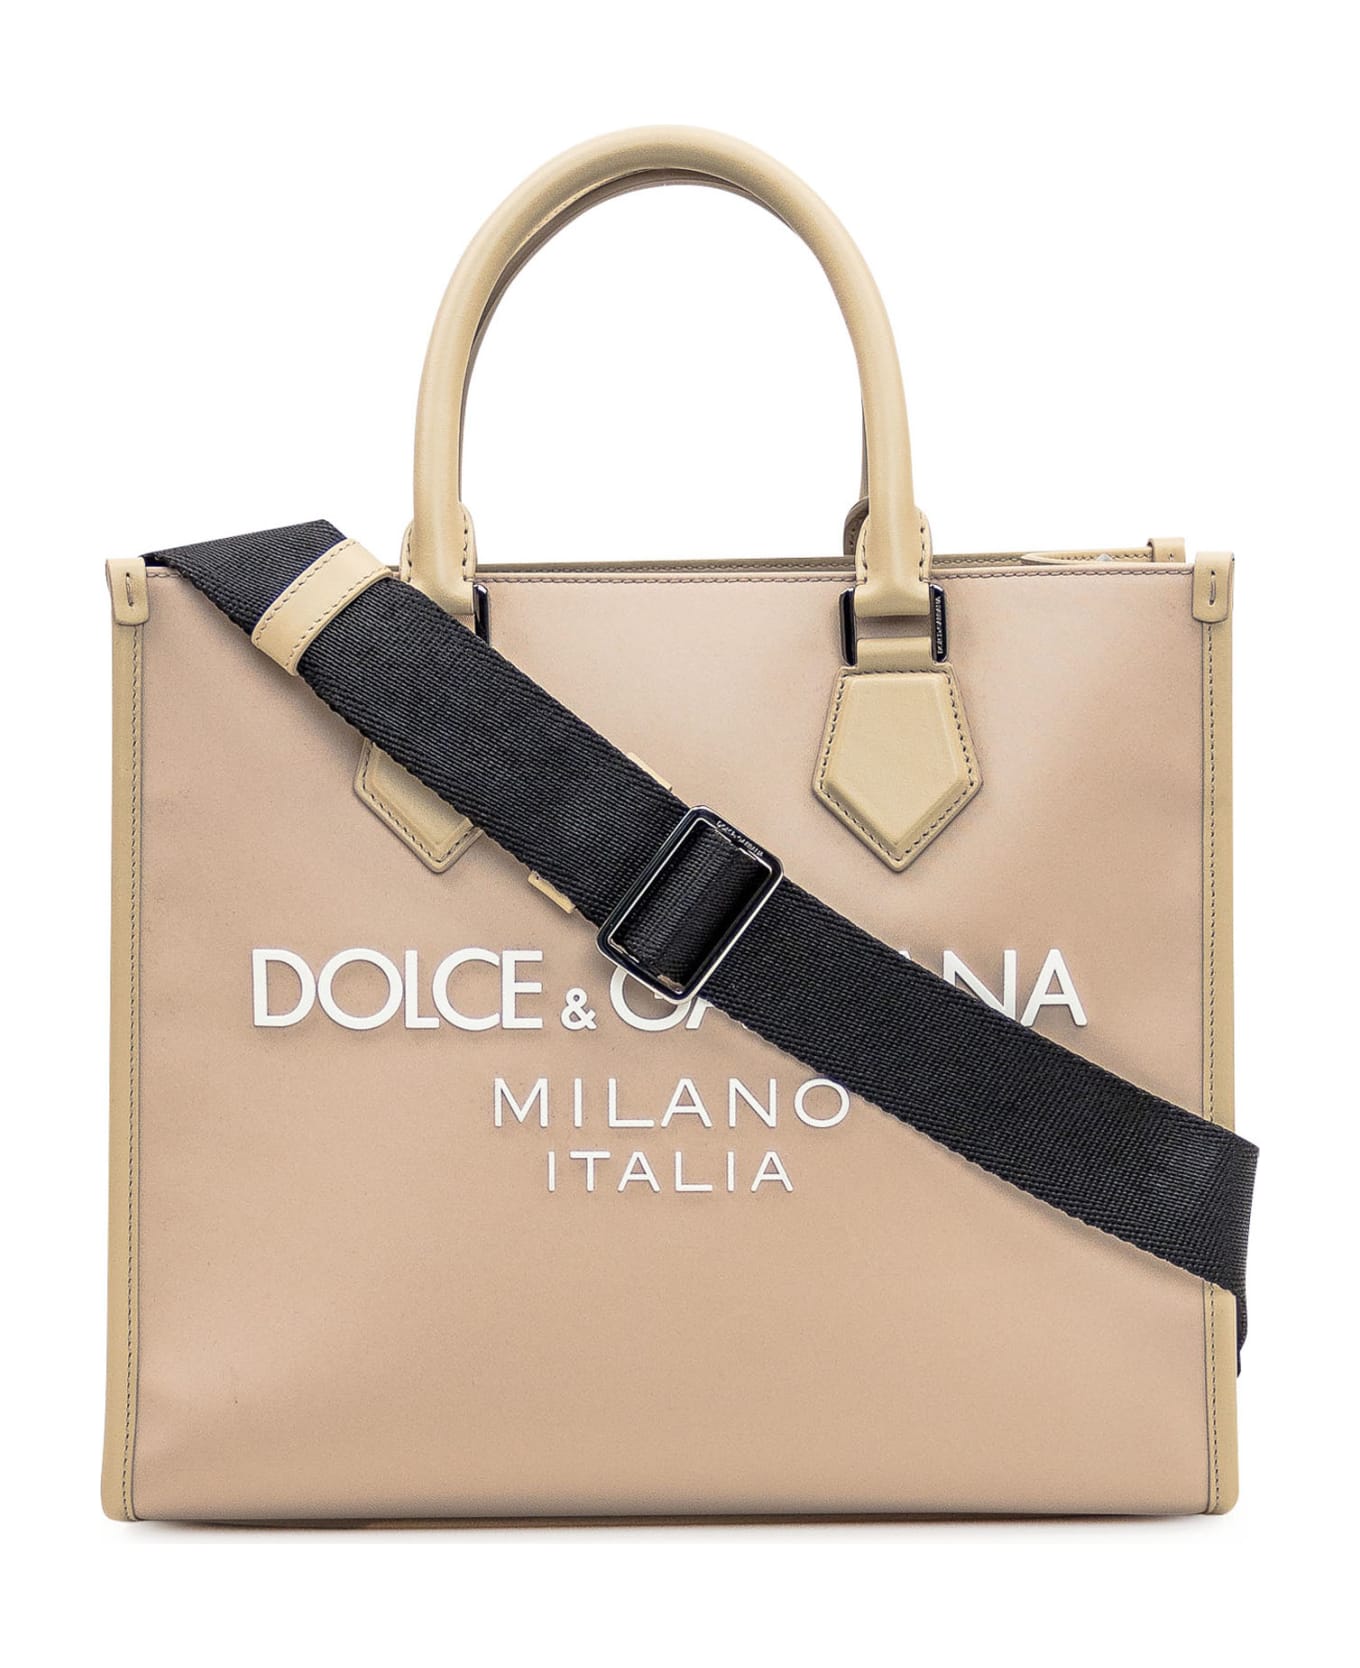 Dolce & Gabbana Shopping Bag With Logo - Desert/Beige